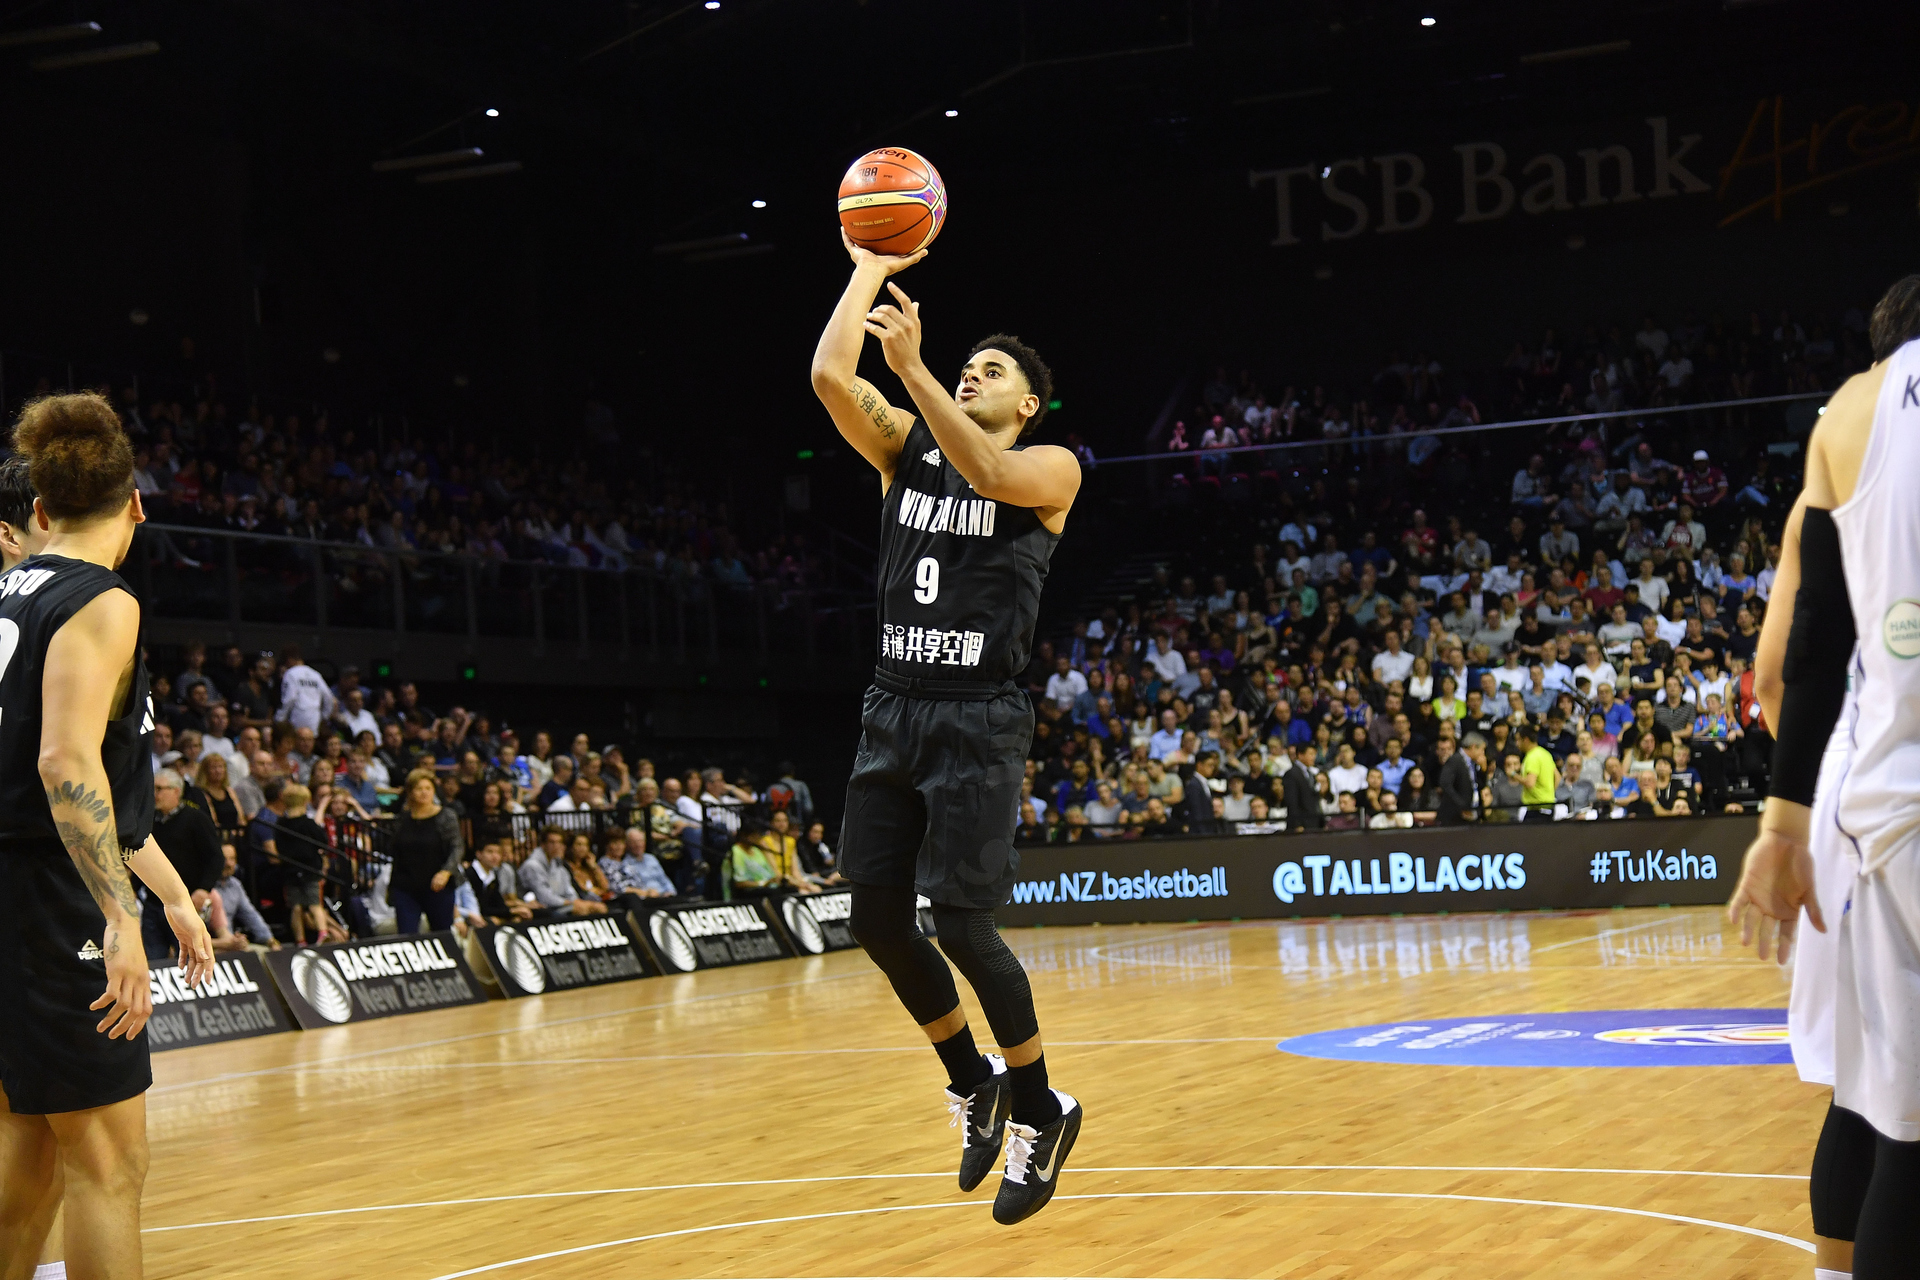 Basketball: Steven Adams reveals challenges of his childhood - NZ Herald